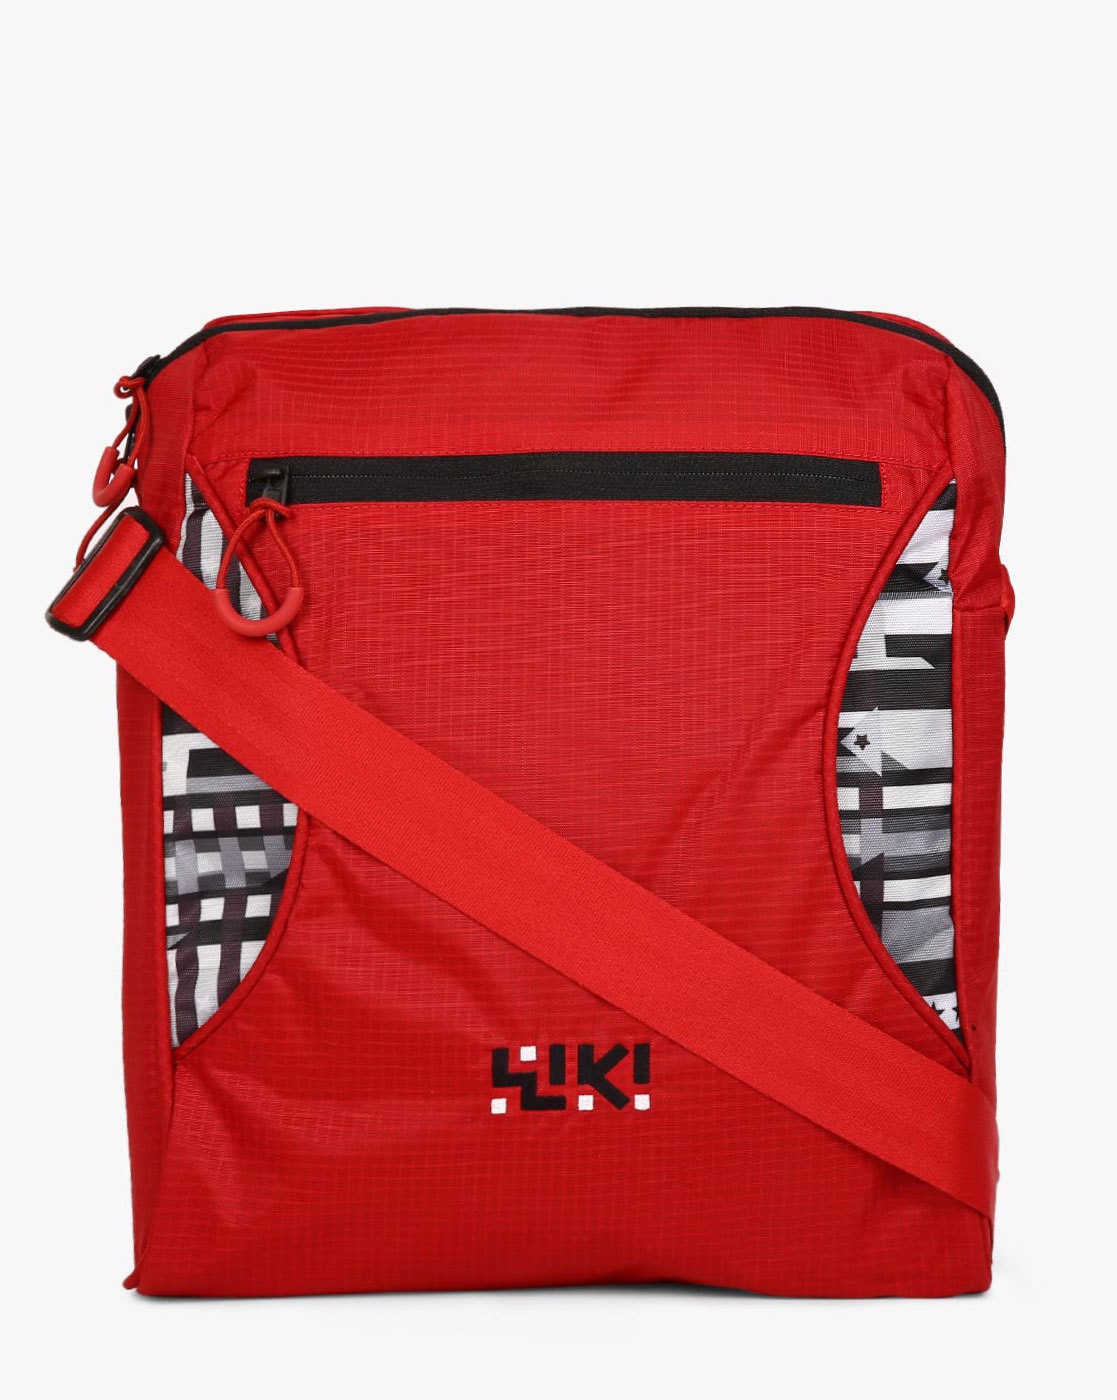 Top more than 160 buy wildcraft sling bags online super hot - xkldase.edu.vn